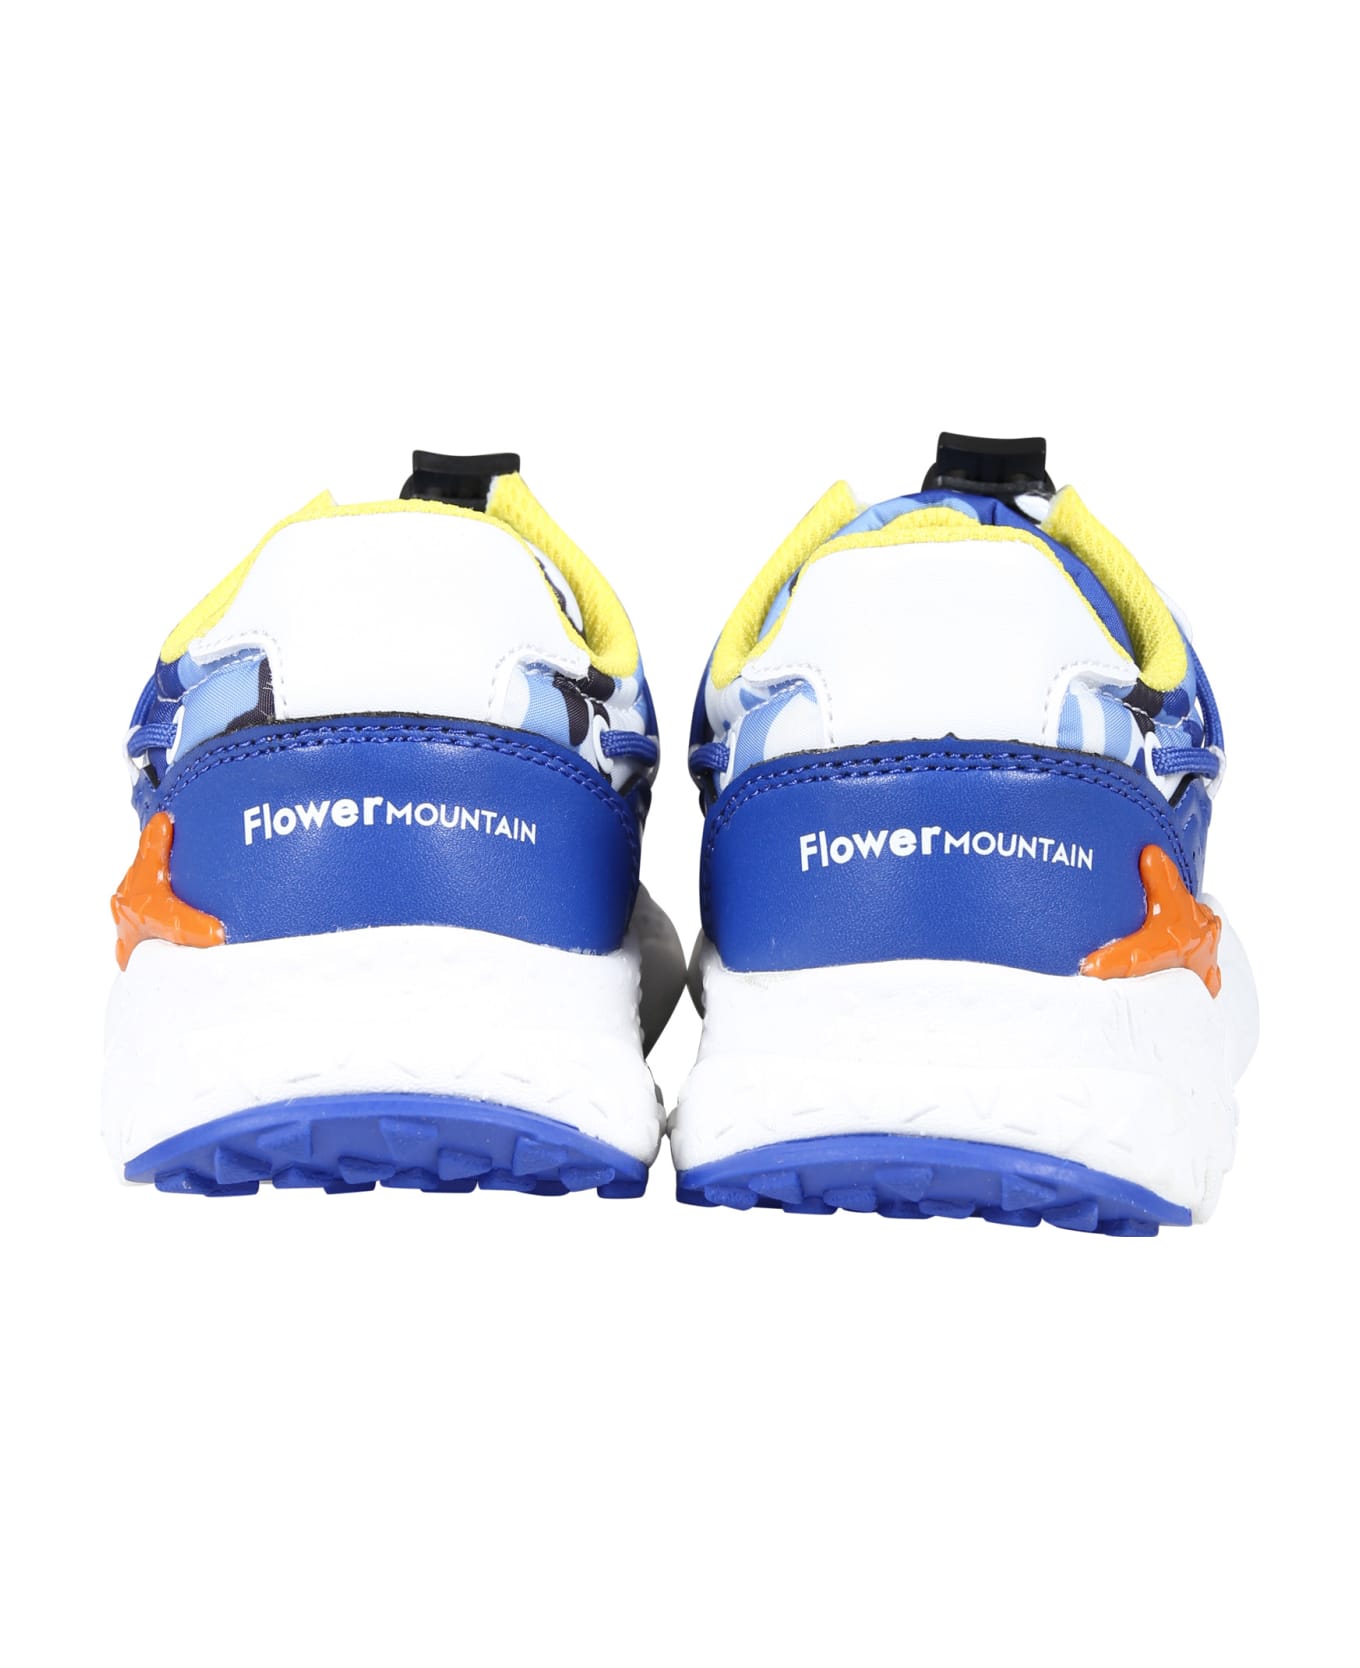 Flower Mountain Blue Raikiri Sneakers For Boy - Blue シューズ